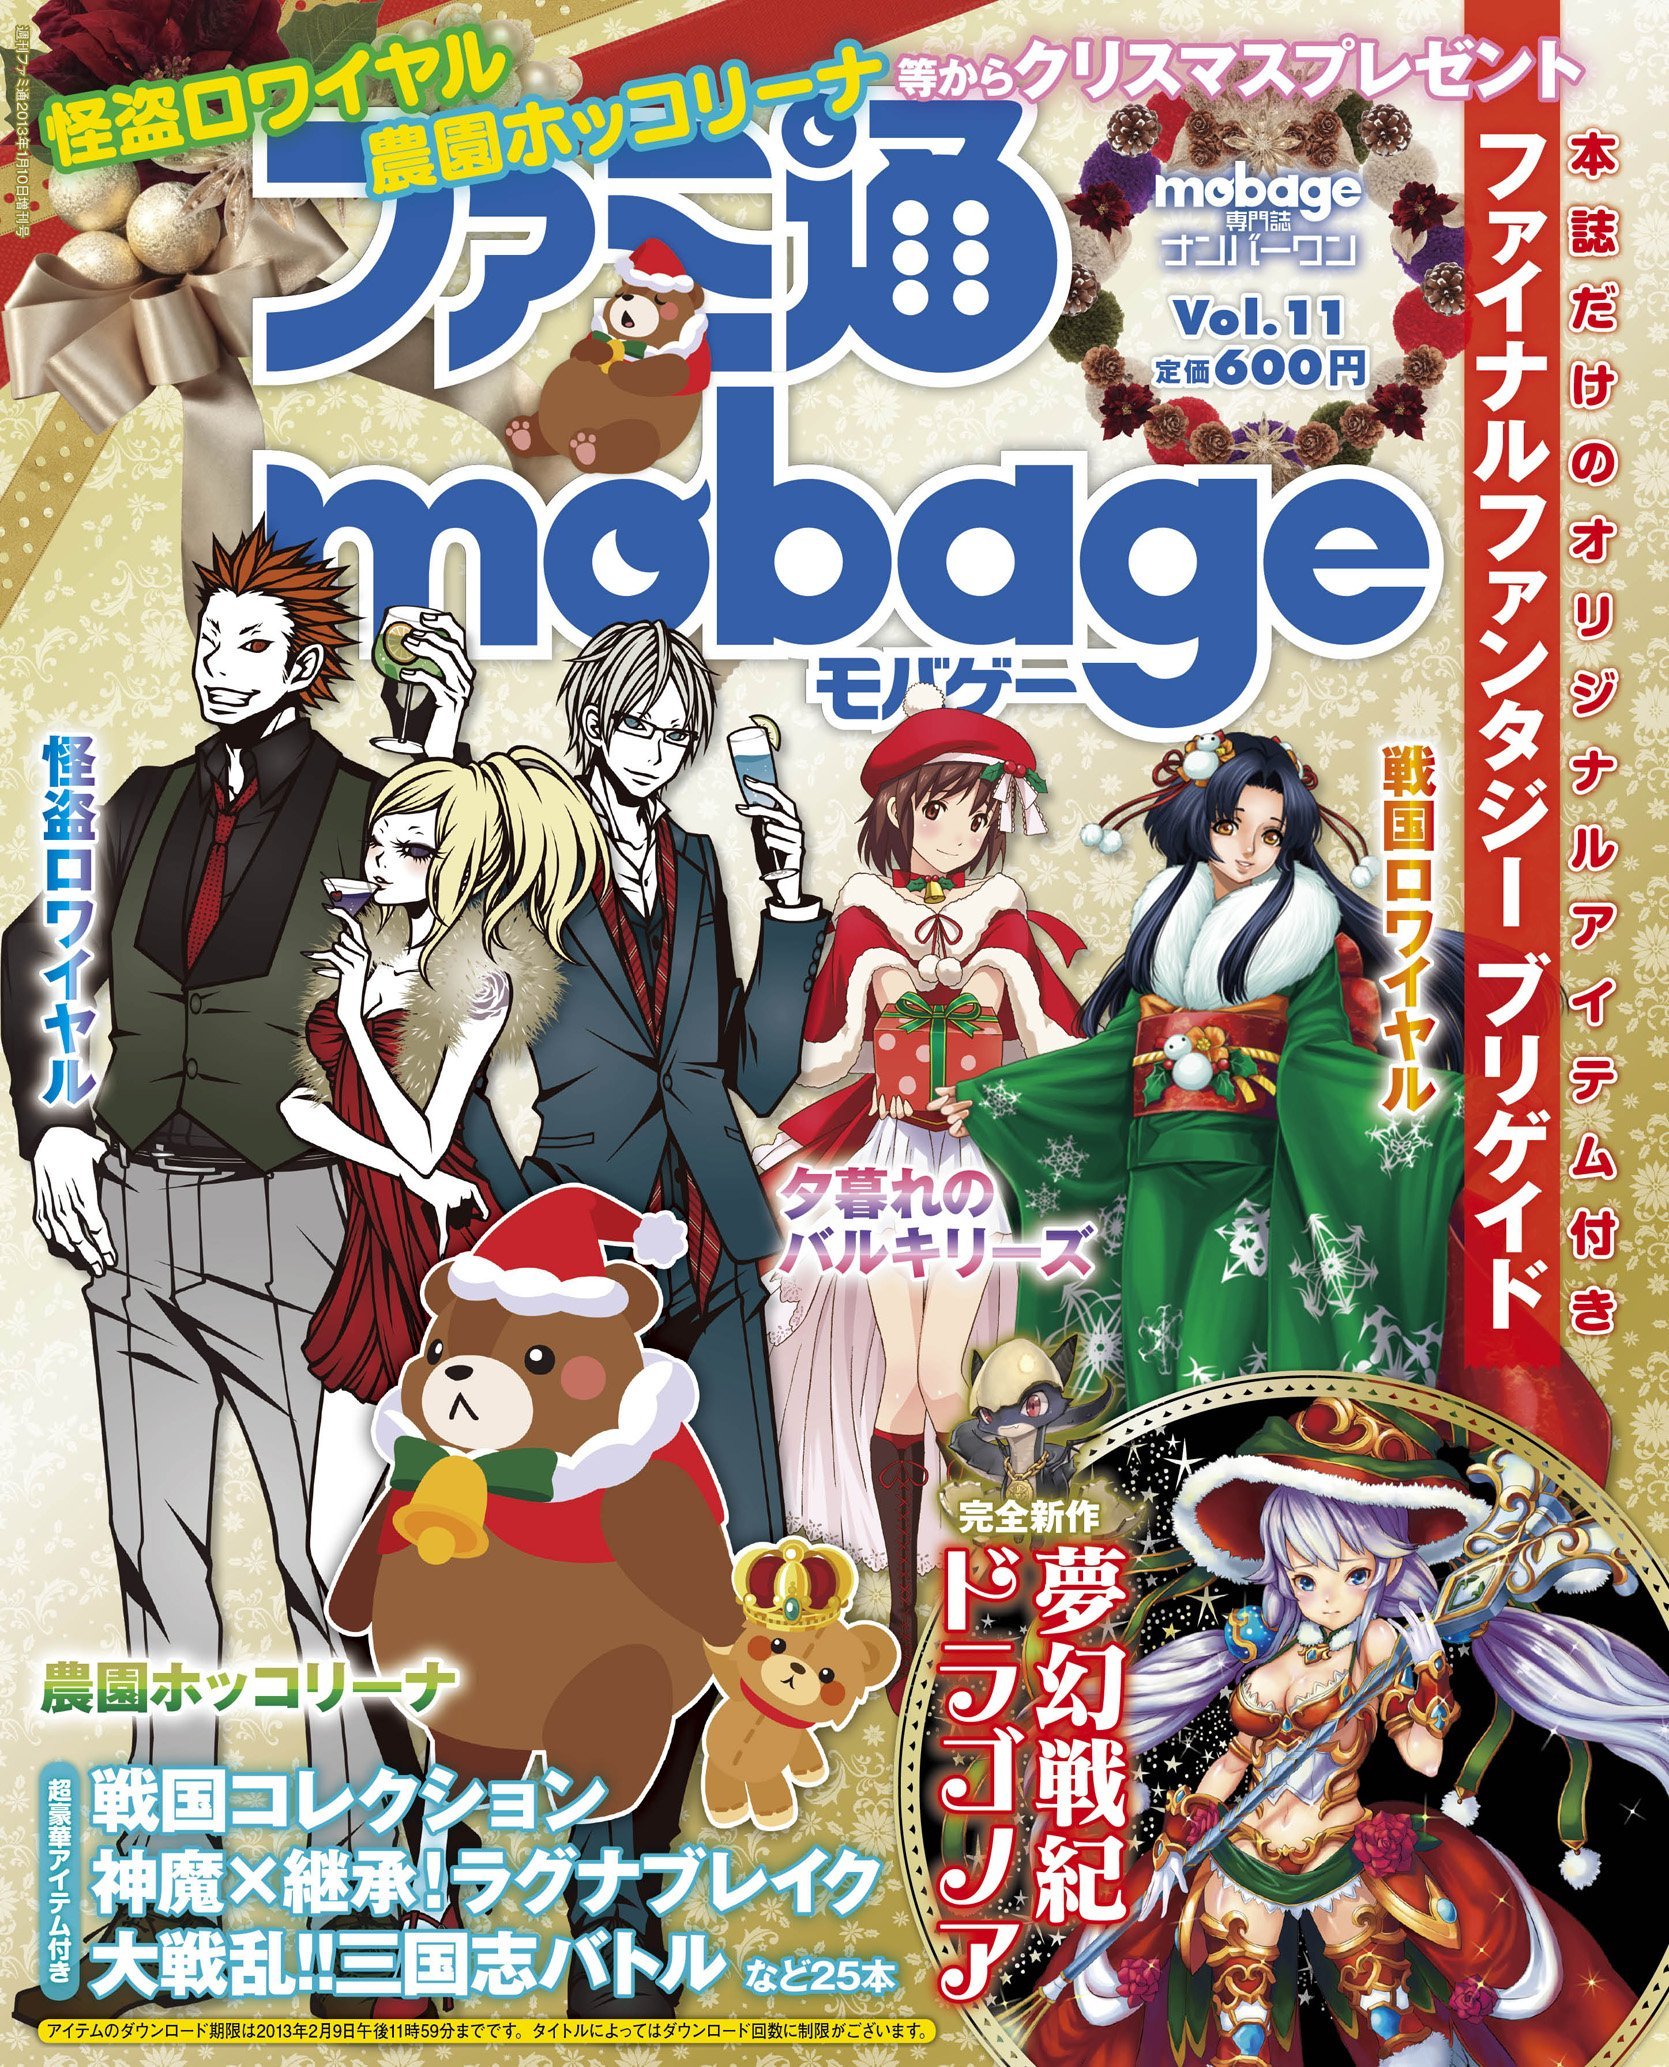 Famitsu Mobage Vol.11 January 10, 2013